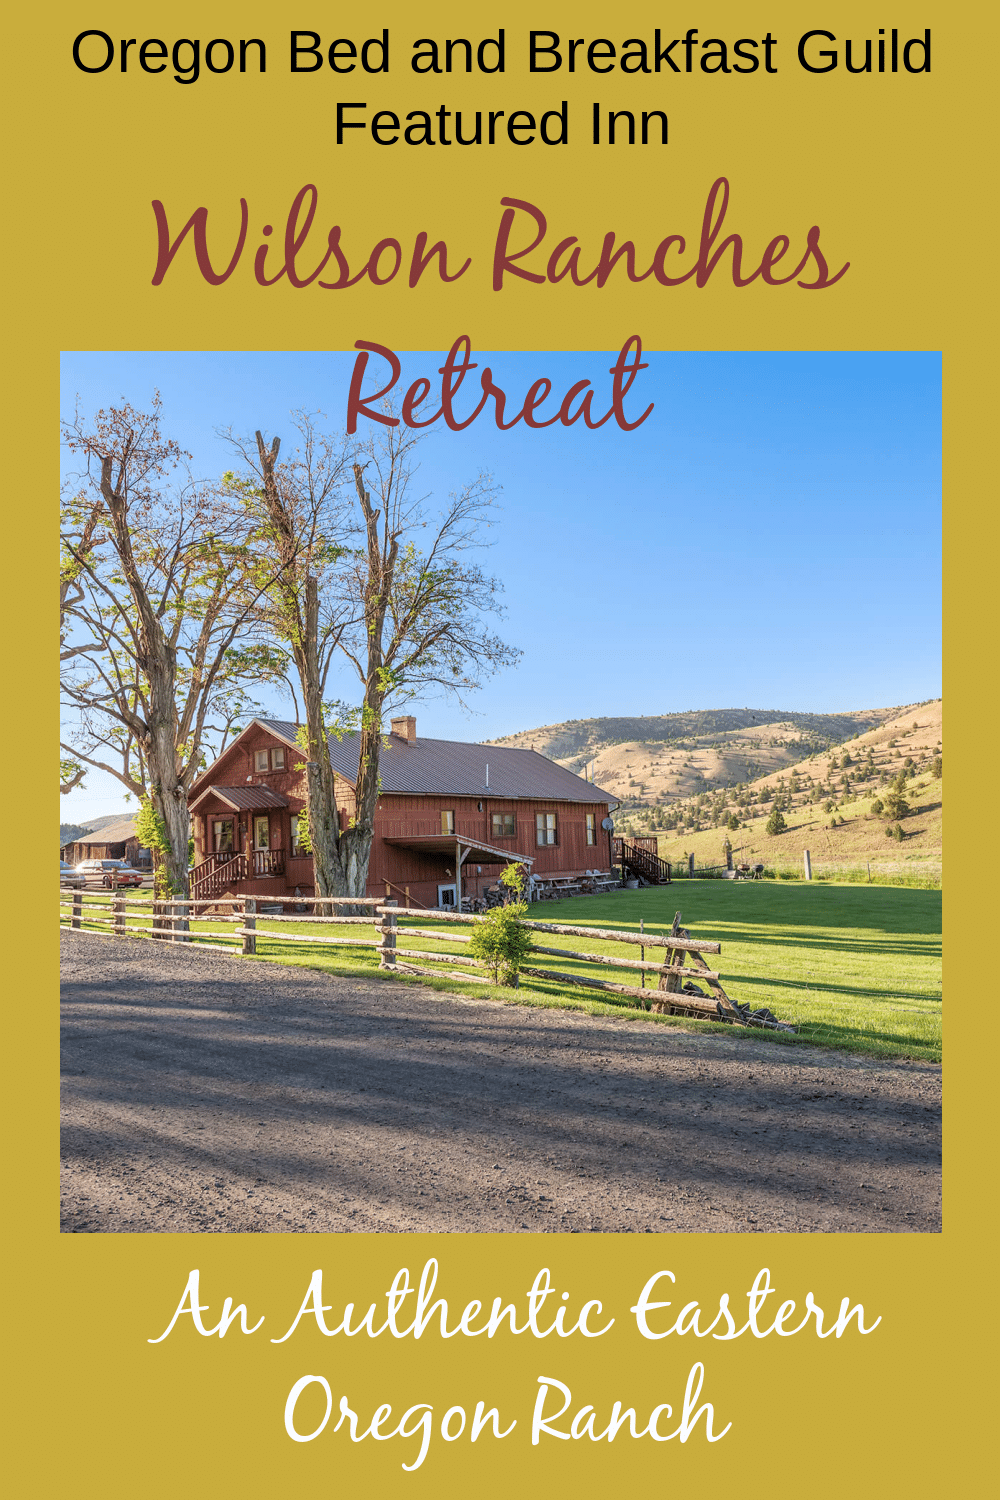 Wilson Ranches Retreat